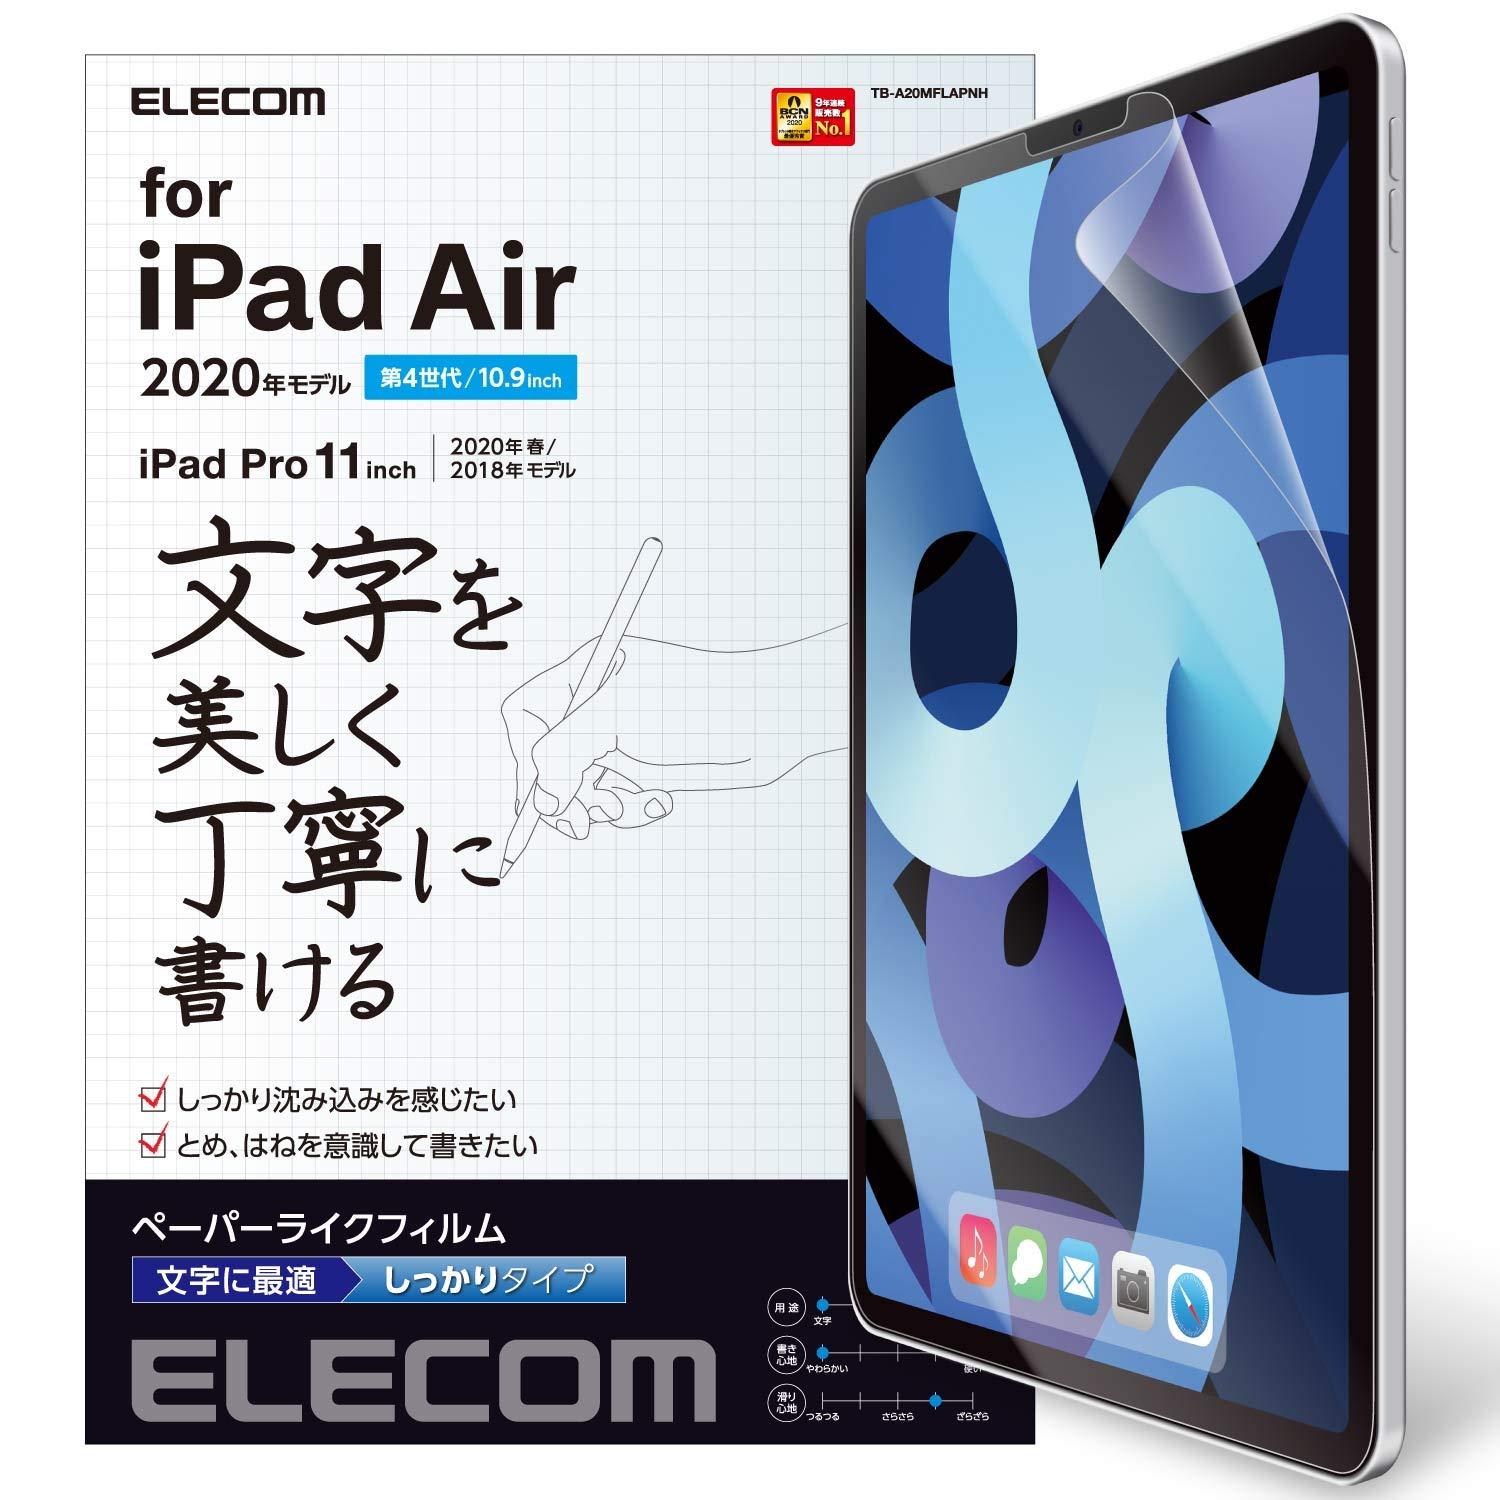 iPad Air 10.9(4/2020)y[p[CNtBp(TB-A20MFLAPNH) ELECOM GR